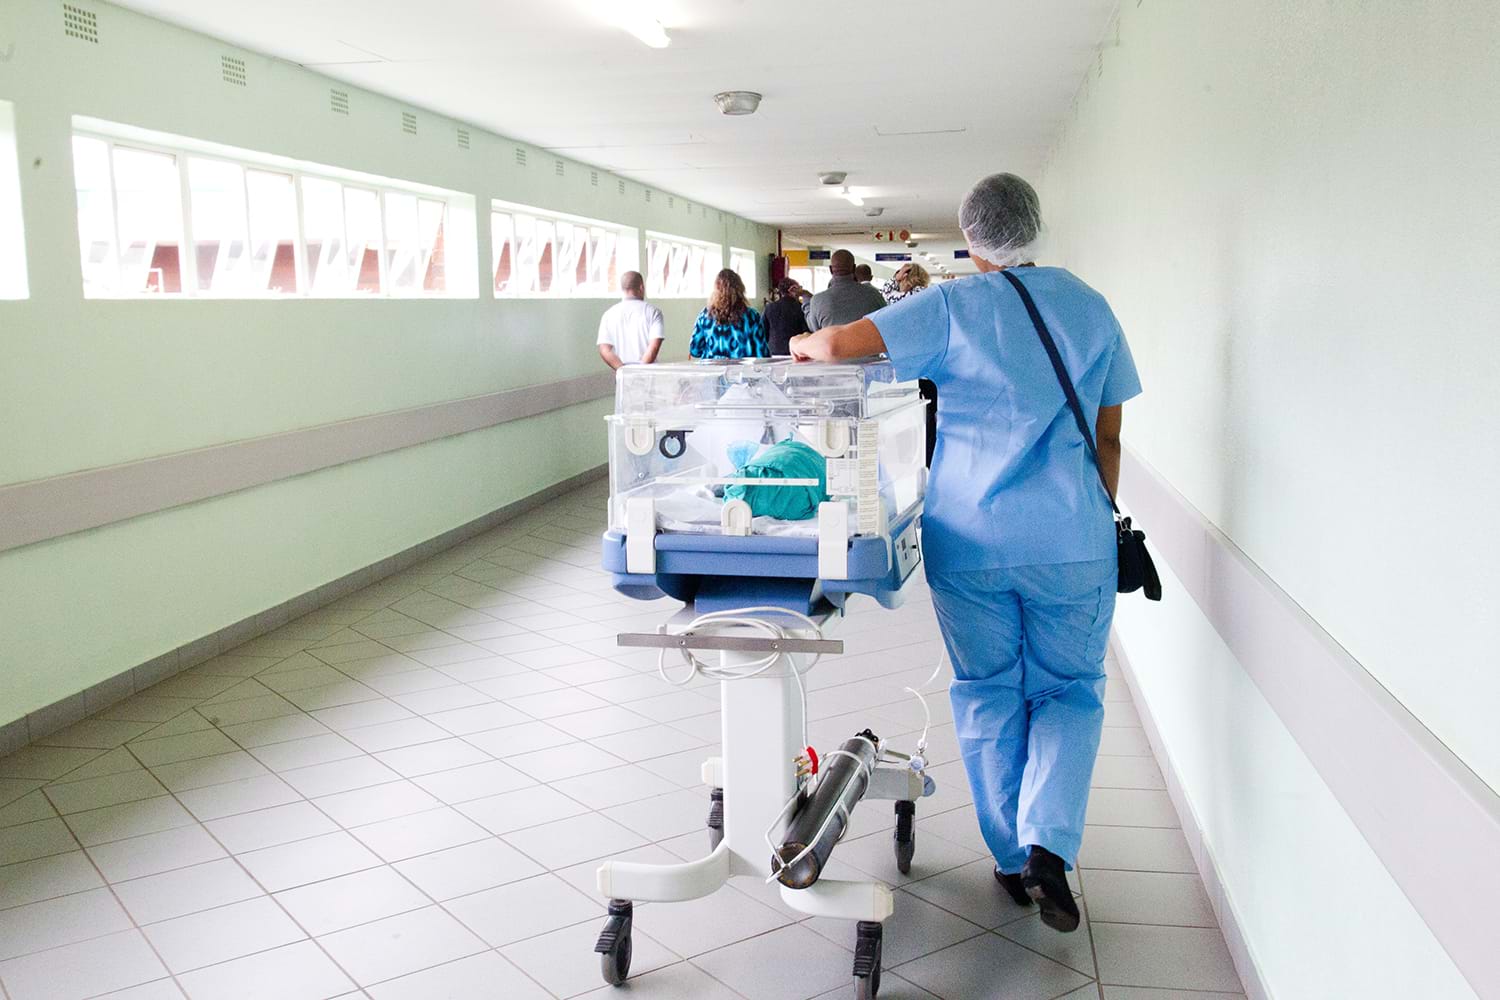 Hospital worker wheeling a cart 